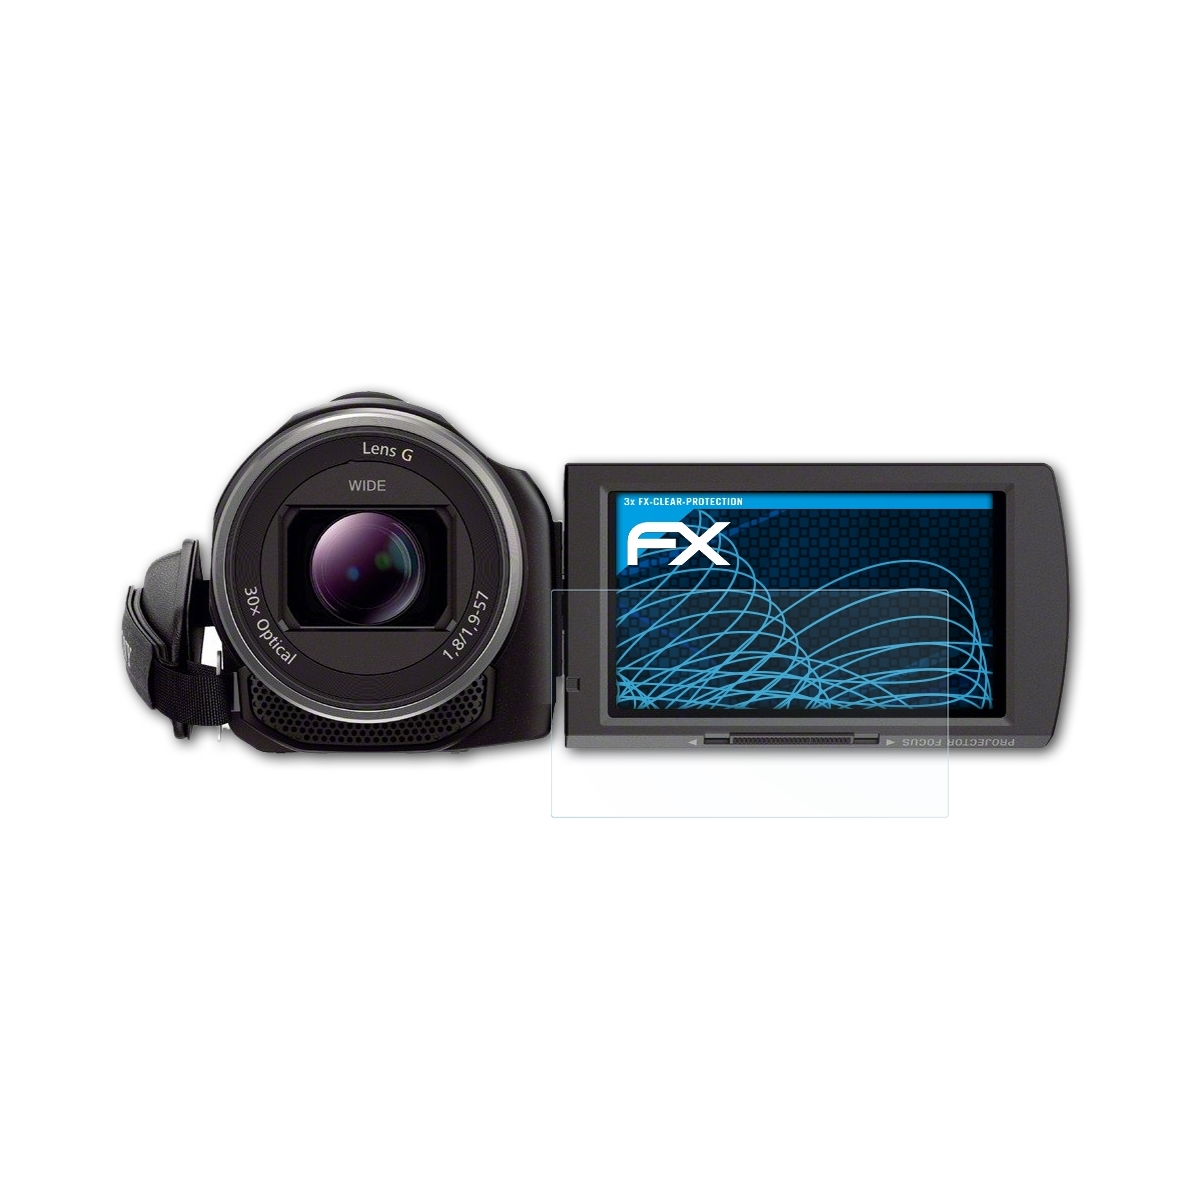 Displayschutz(für HDR-PJ530E) ATFOLIX 3x Sony FX-Clear